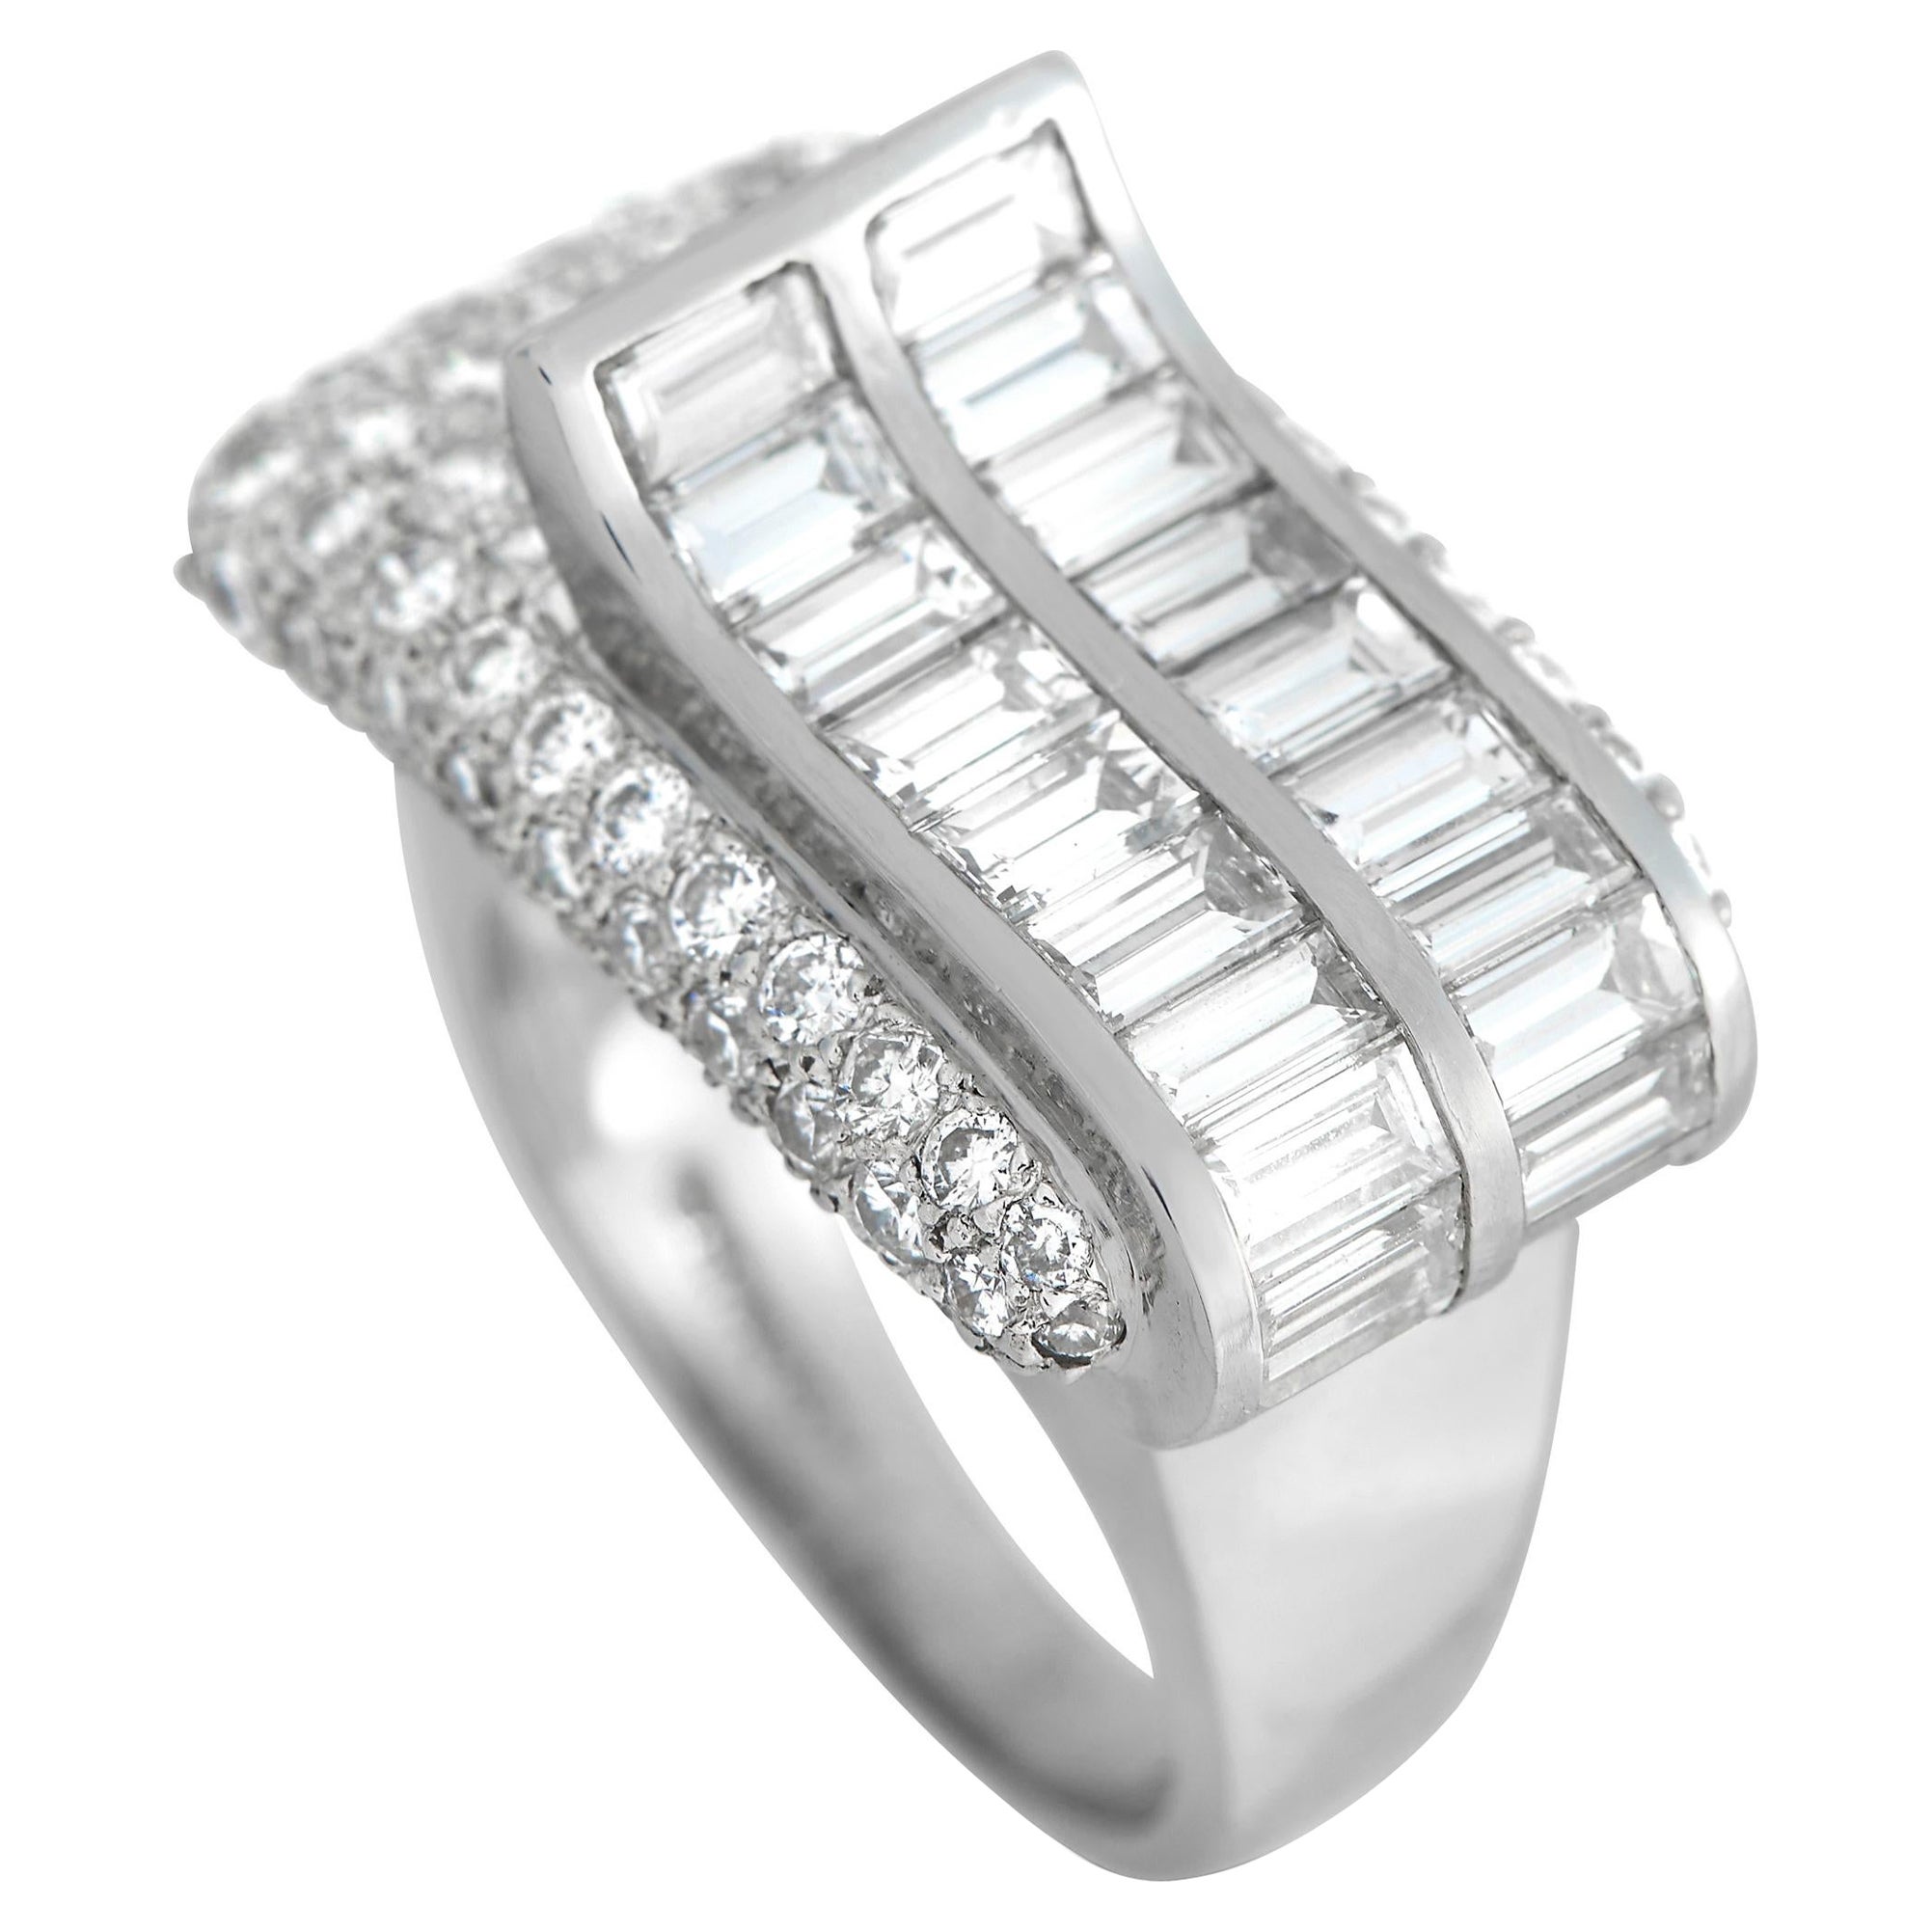 Charles Krypell Platinum 4.50 Carat Diamond Ring For Sale